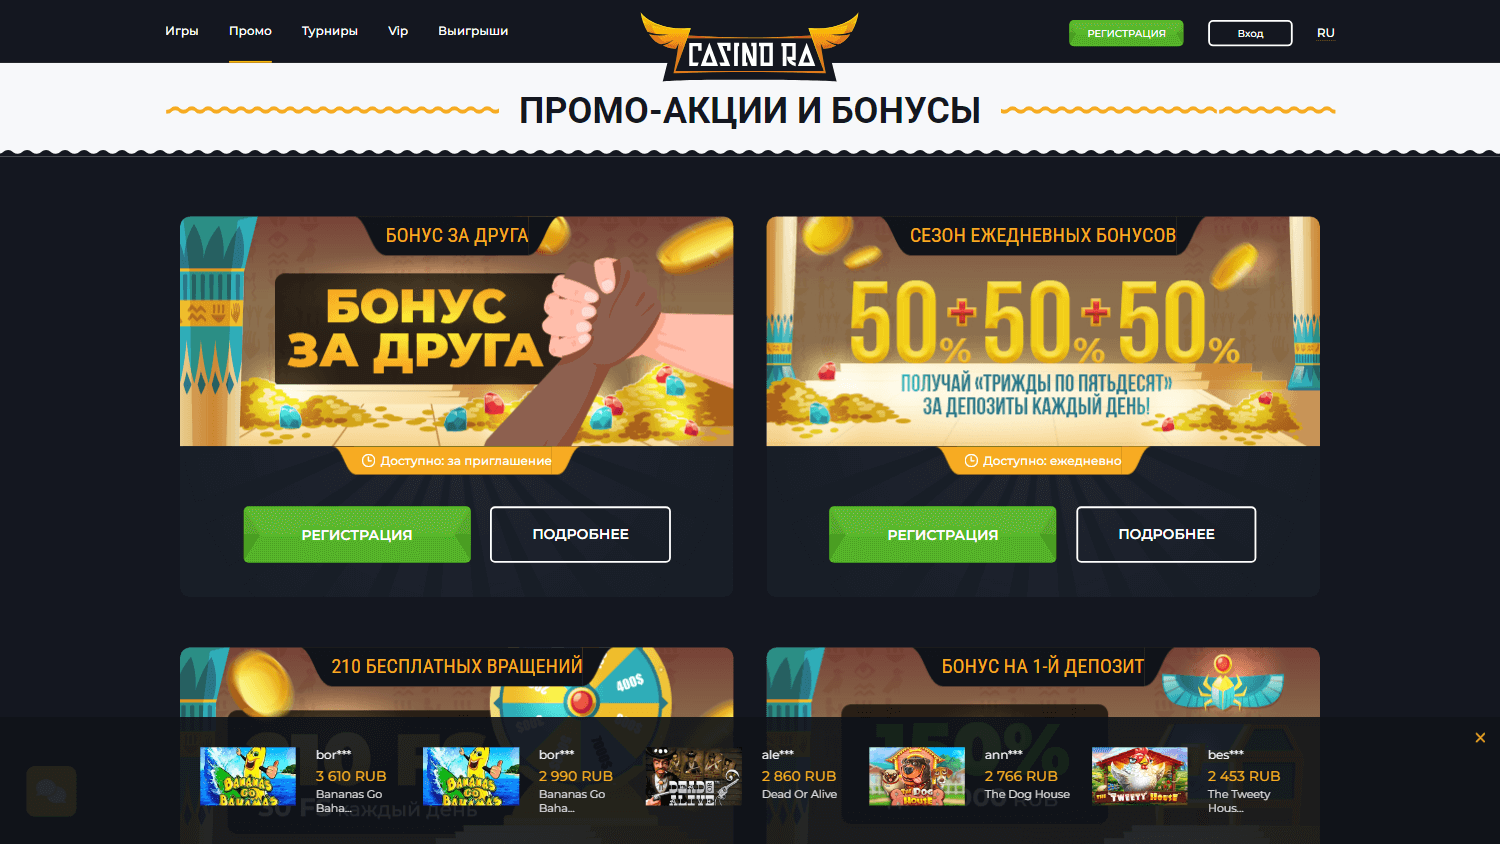 casino_ra_promotions_desktop